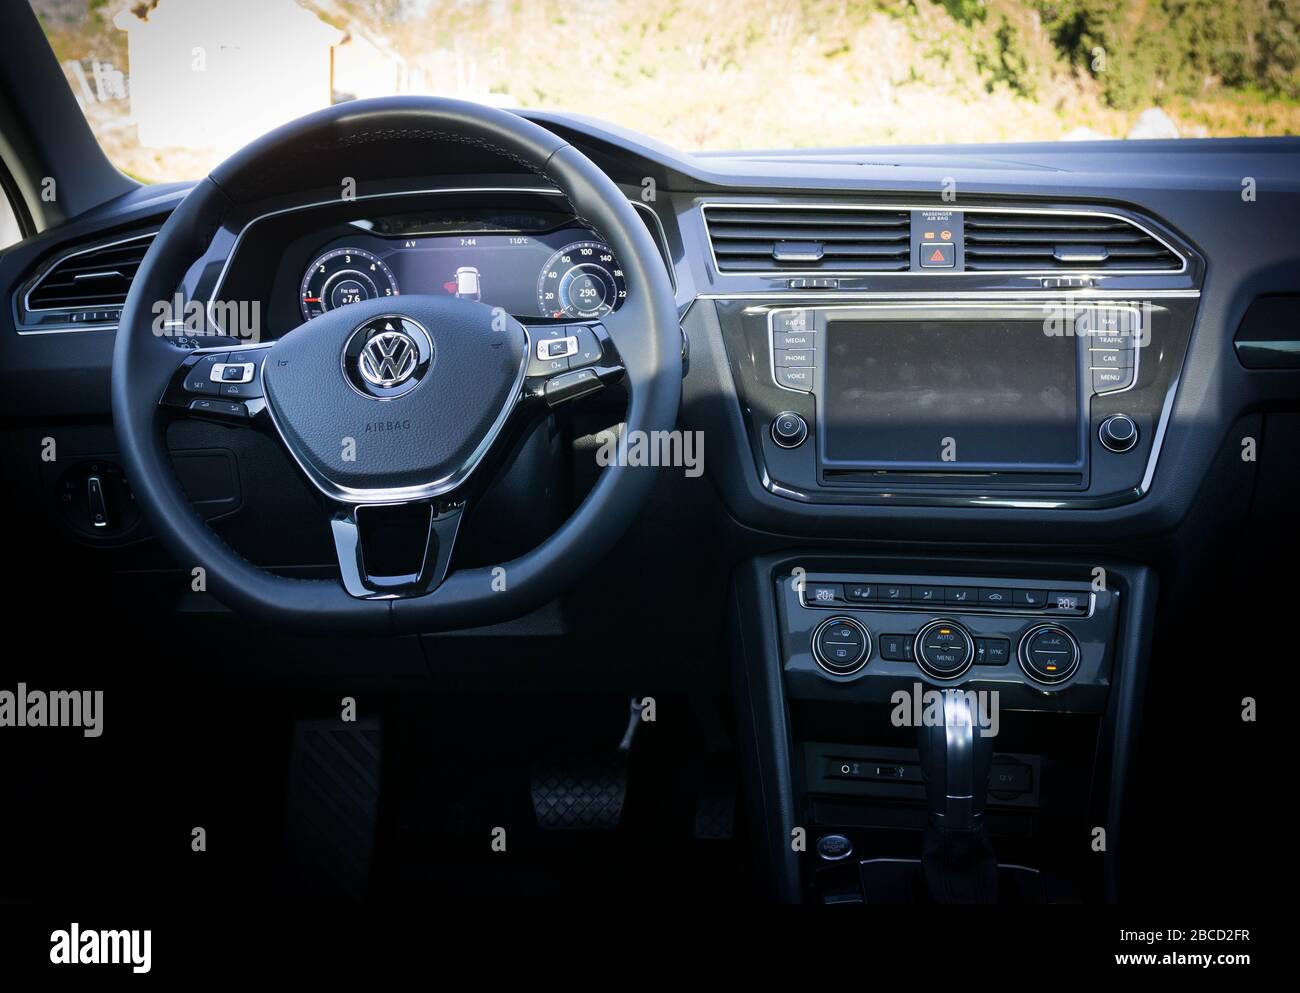 VW Tiguan interior Stock Photo